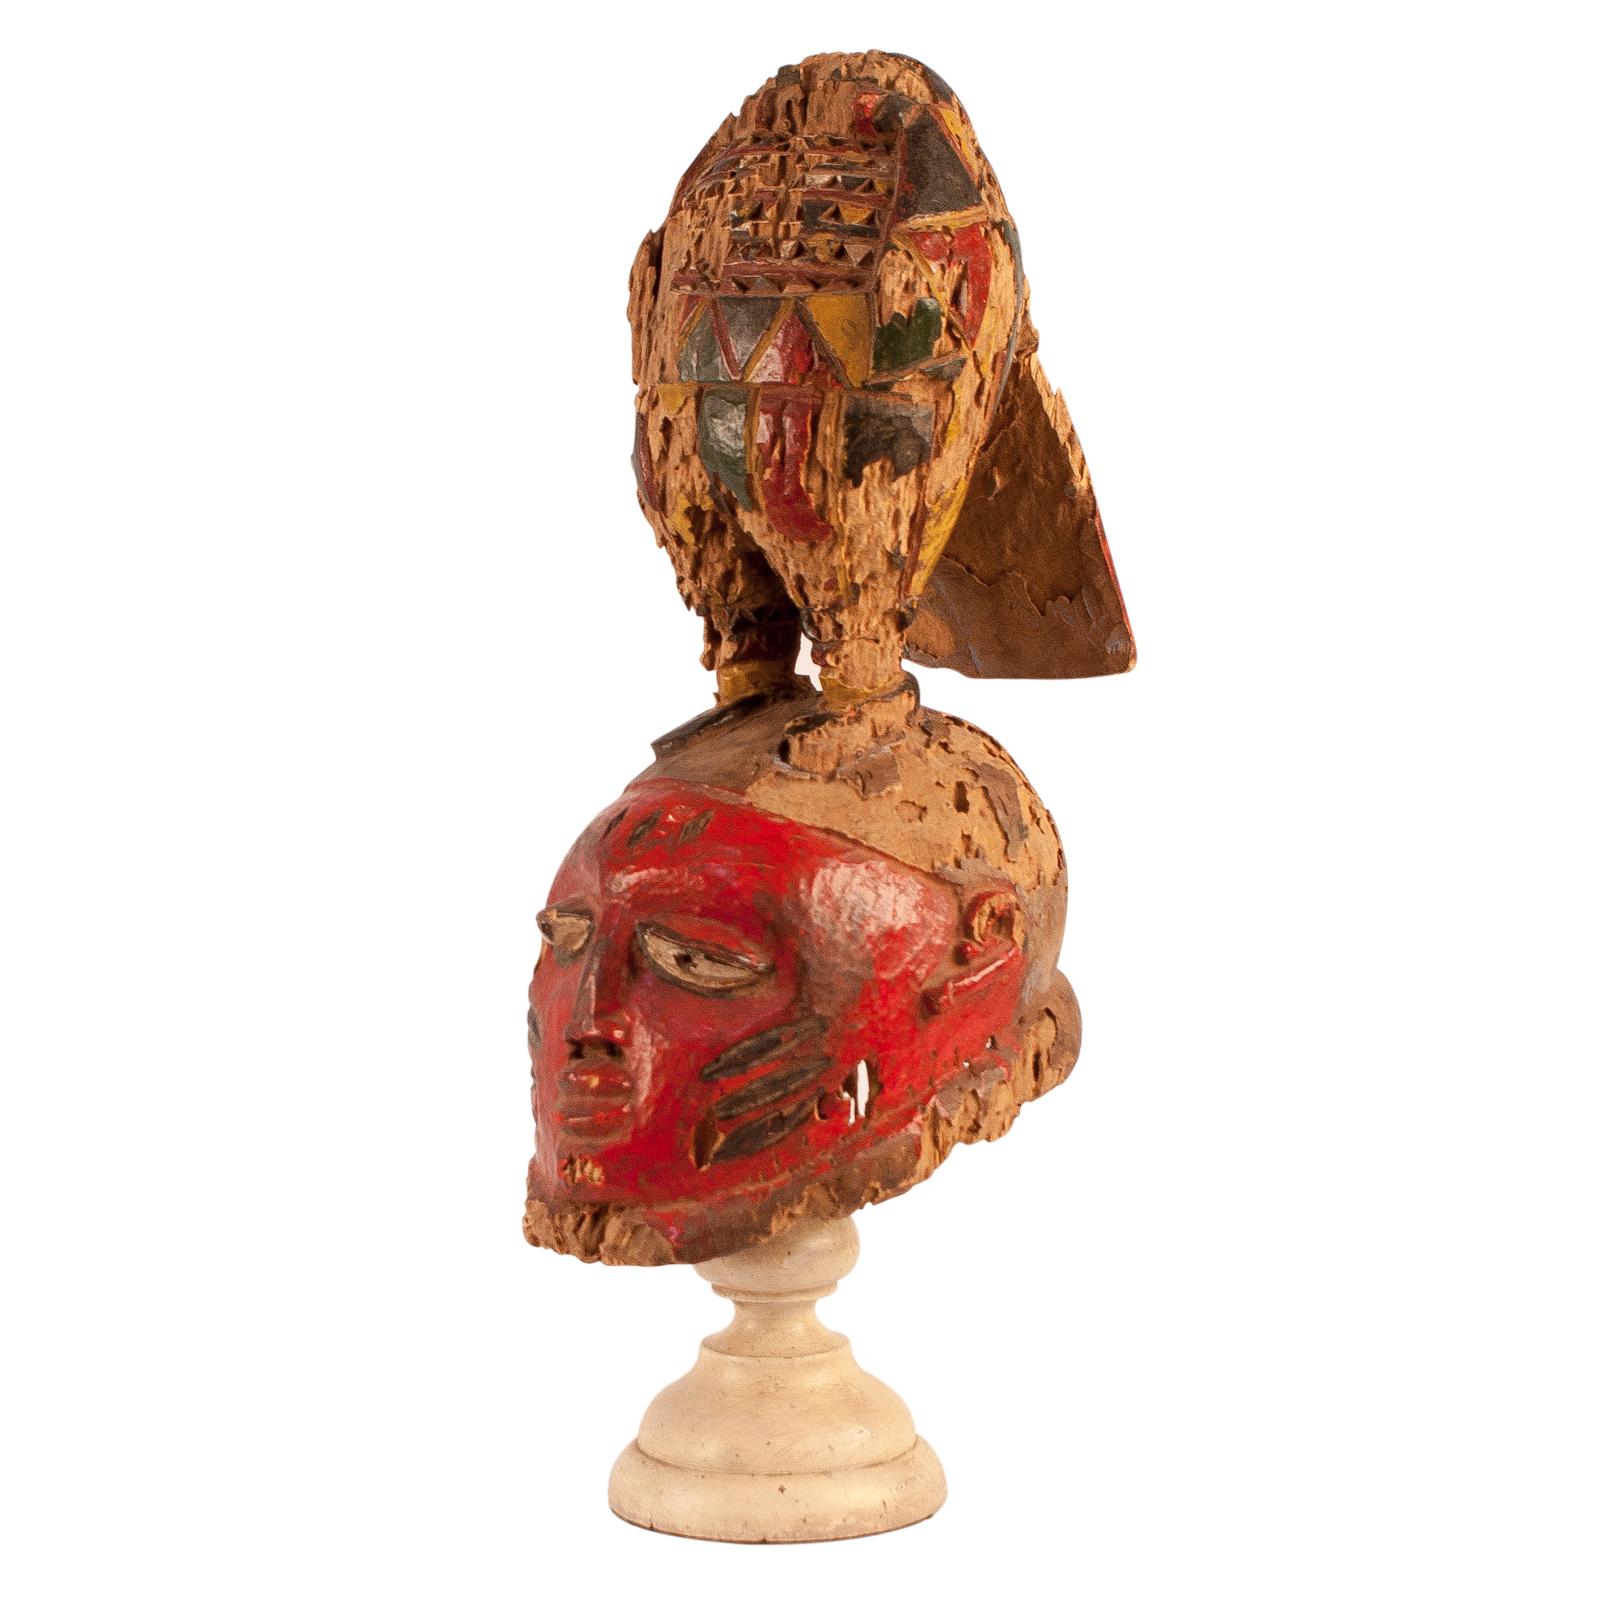 Nigerian Igbo Dance Mask, Nigeria, 19th Century